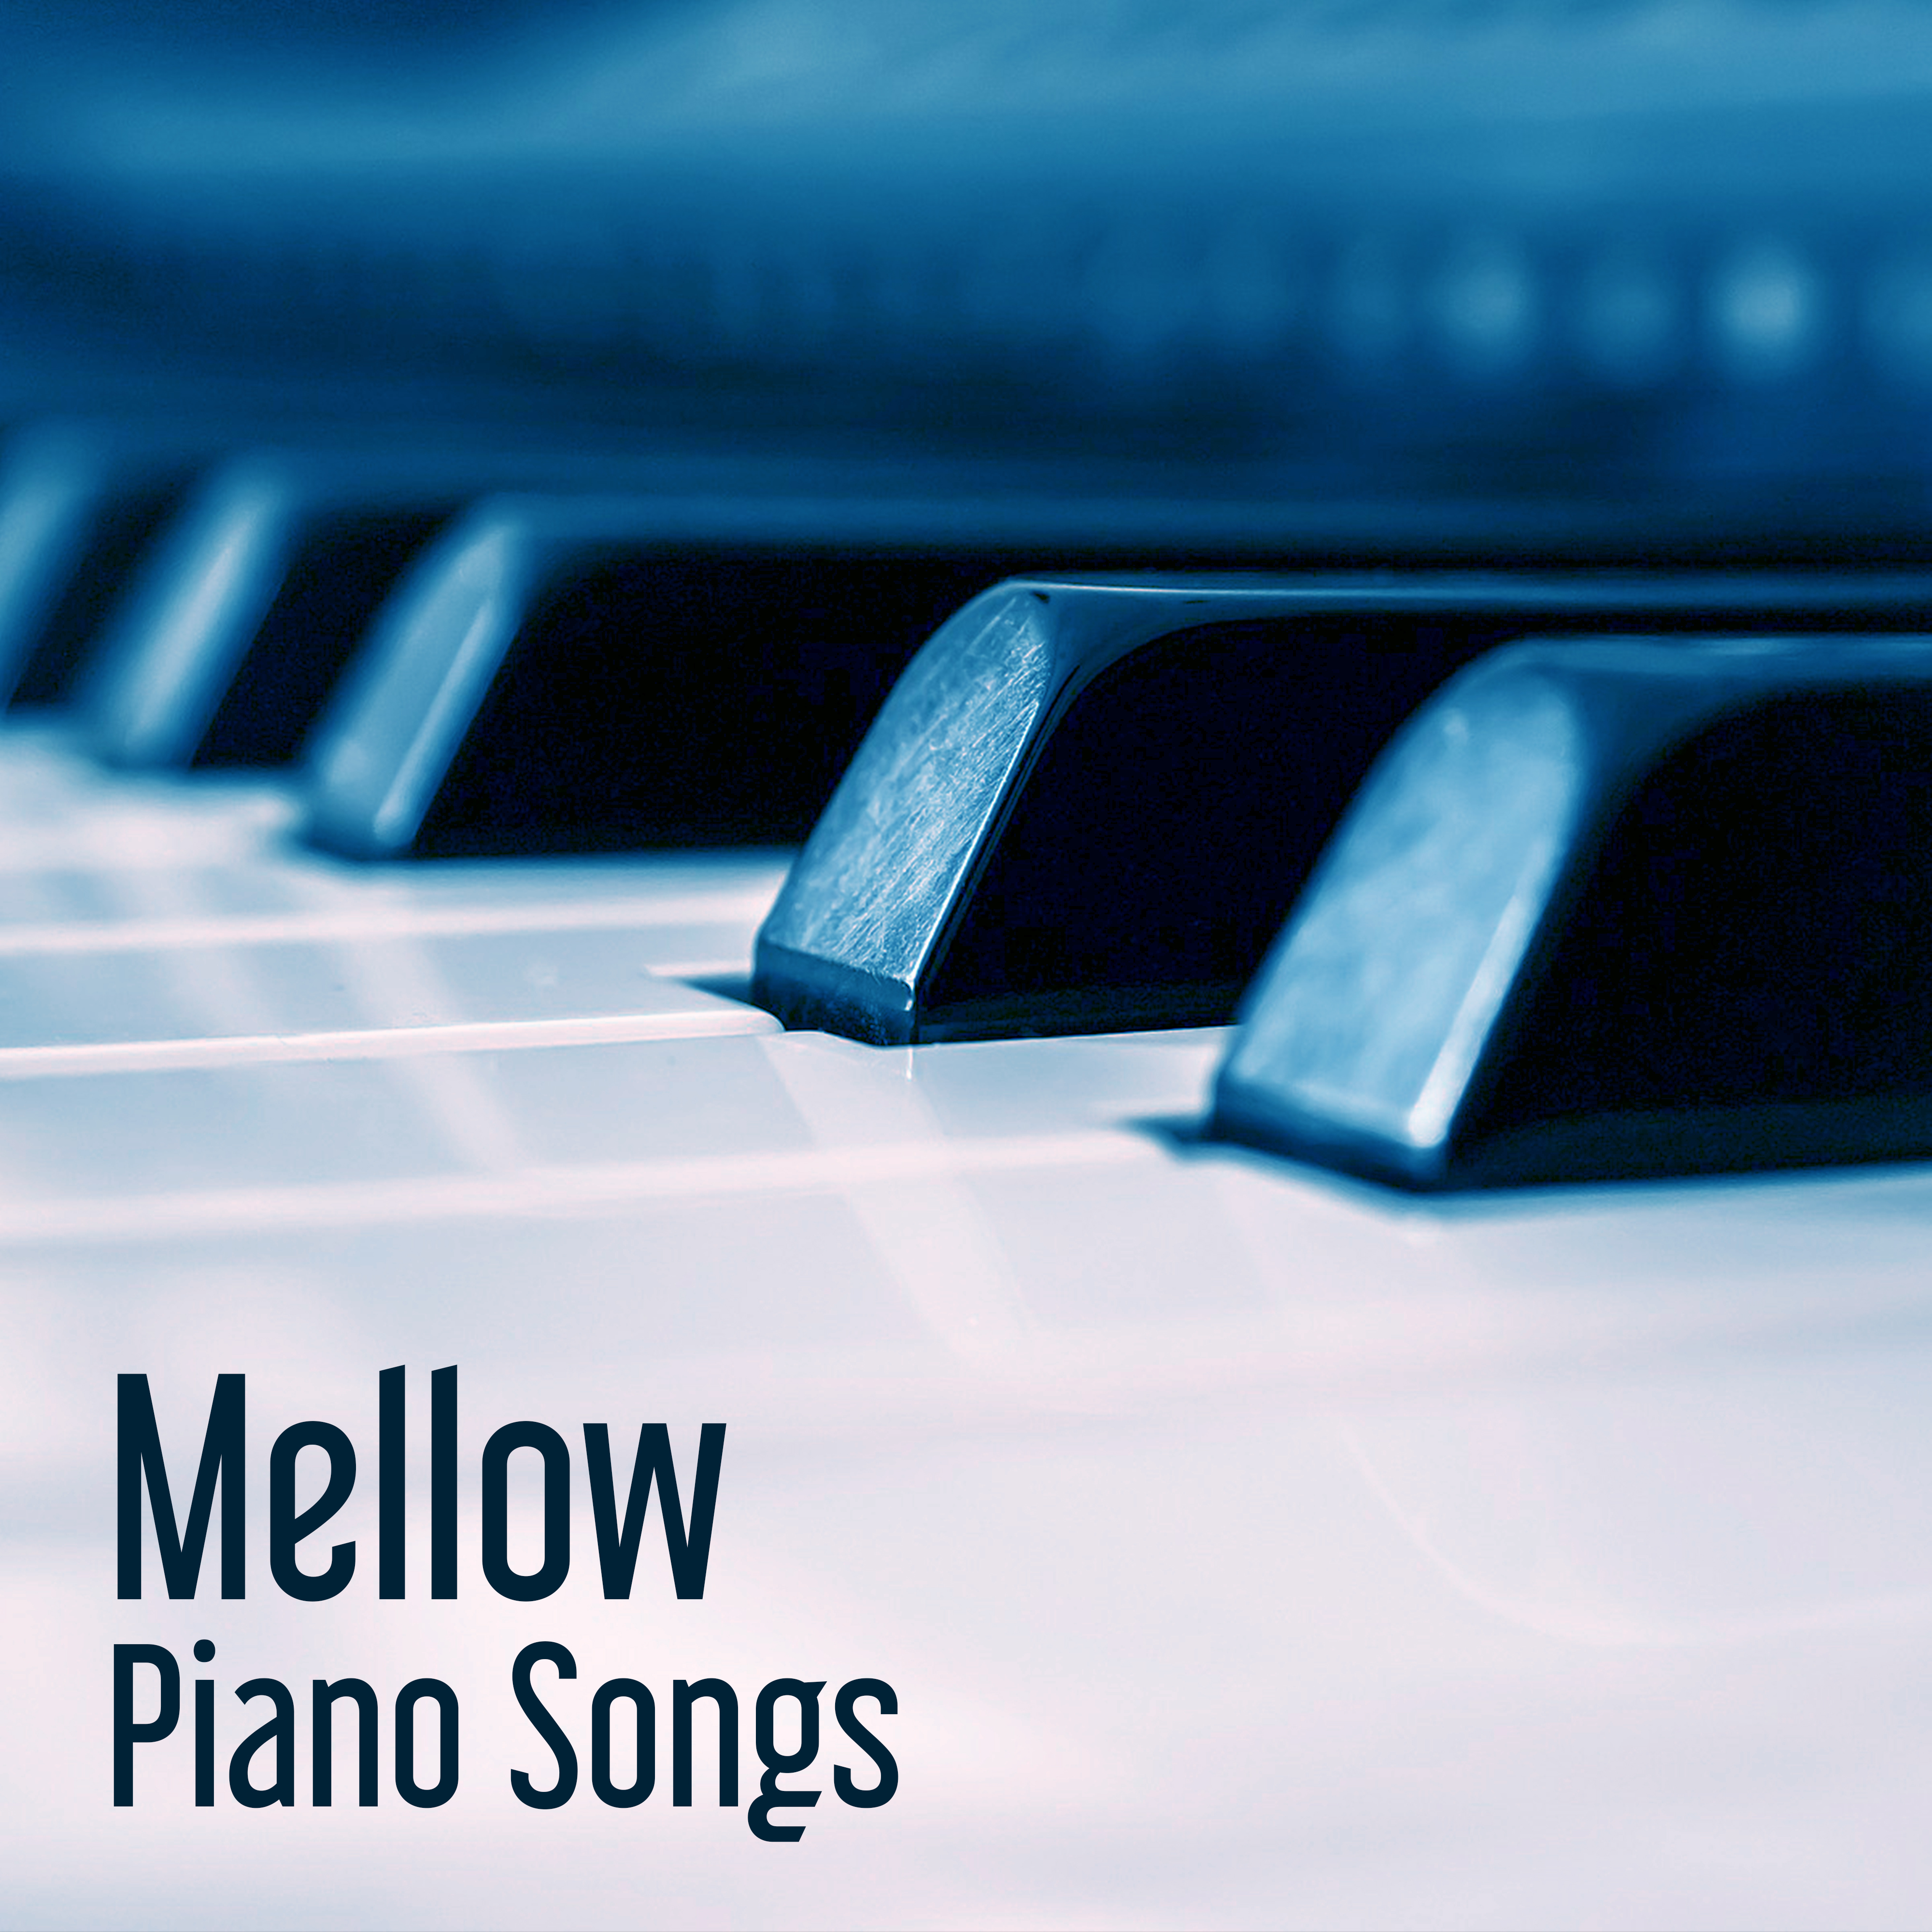 Mellow Piano Songs  Calming Jazz, Relaxaed Jazz, Instrumental, Easy Listening, Cafe  Restaurant